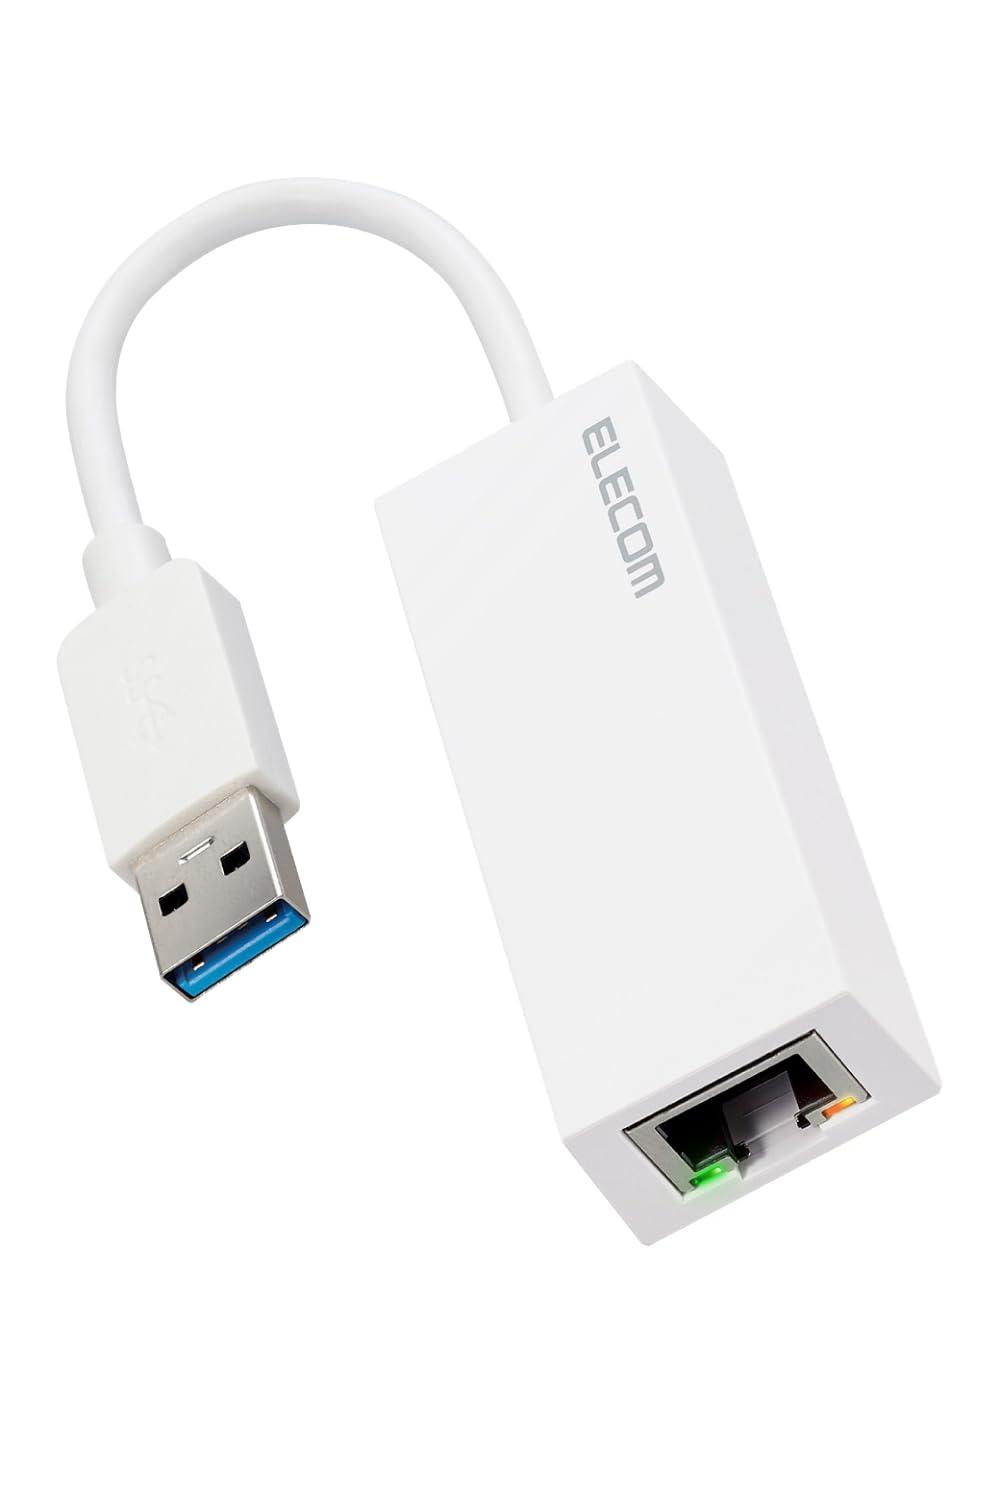  LLANA_v^/GigaΉ/USB 5Gbps/Type-A/zCg(EDC-GUA3V2-W)